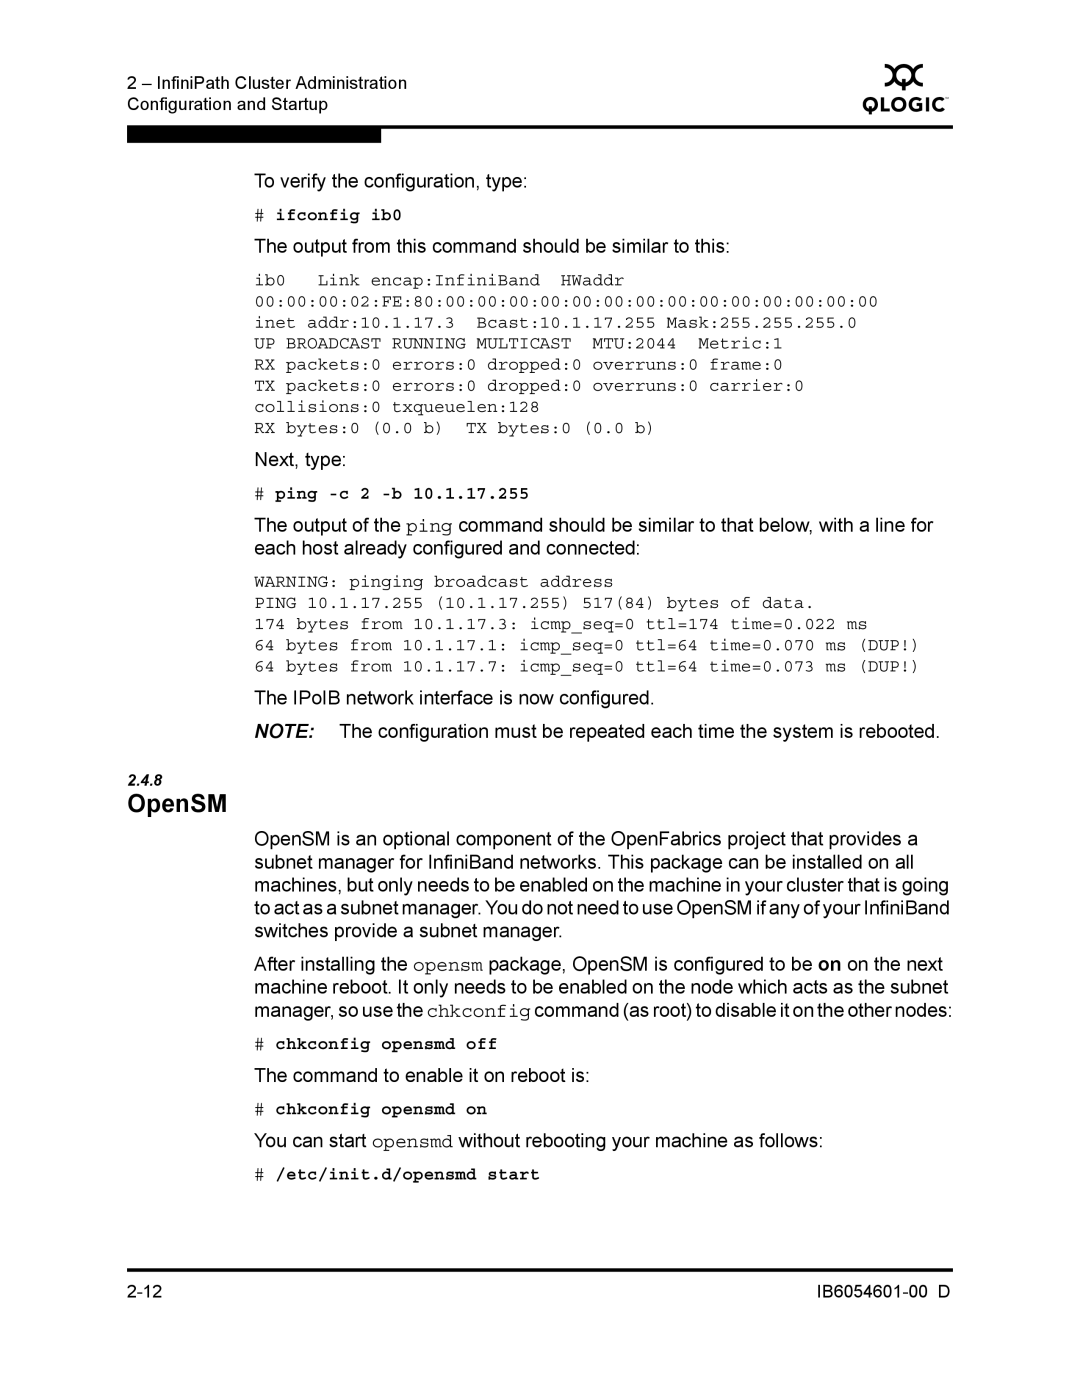 Q-Logic IB6054601-00 D manual OpenSM 